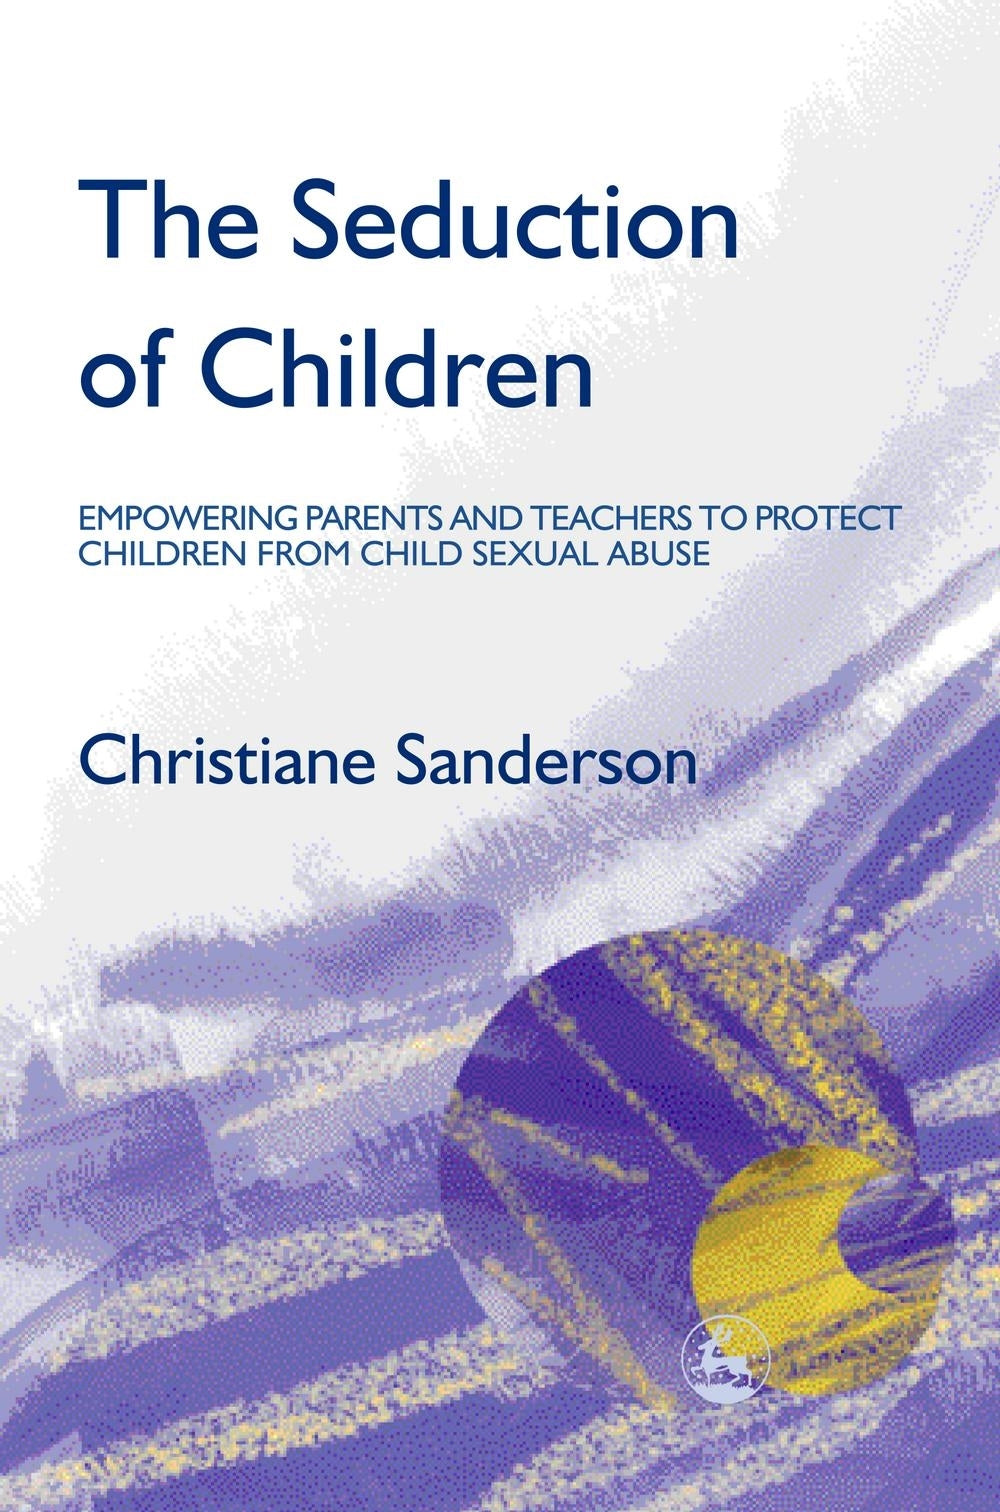 The Seduction of Children by Christiane Sanderson